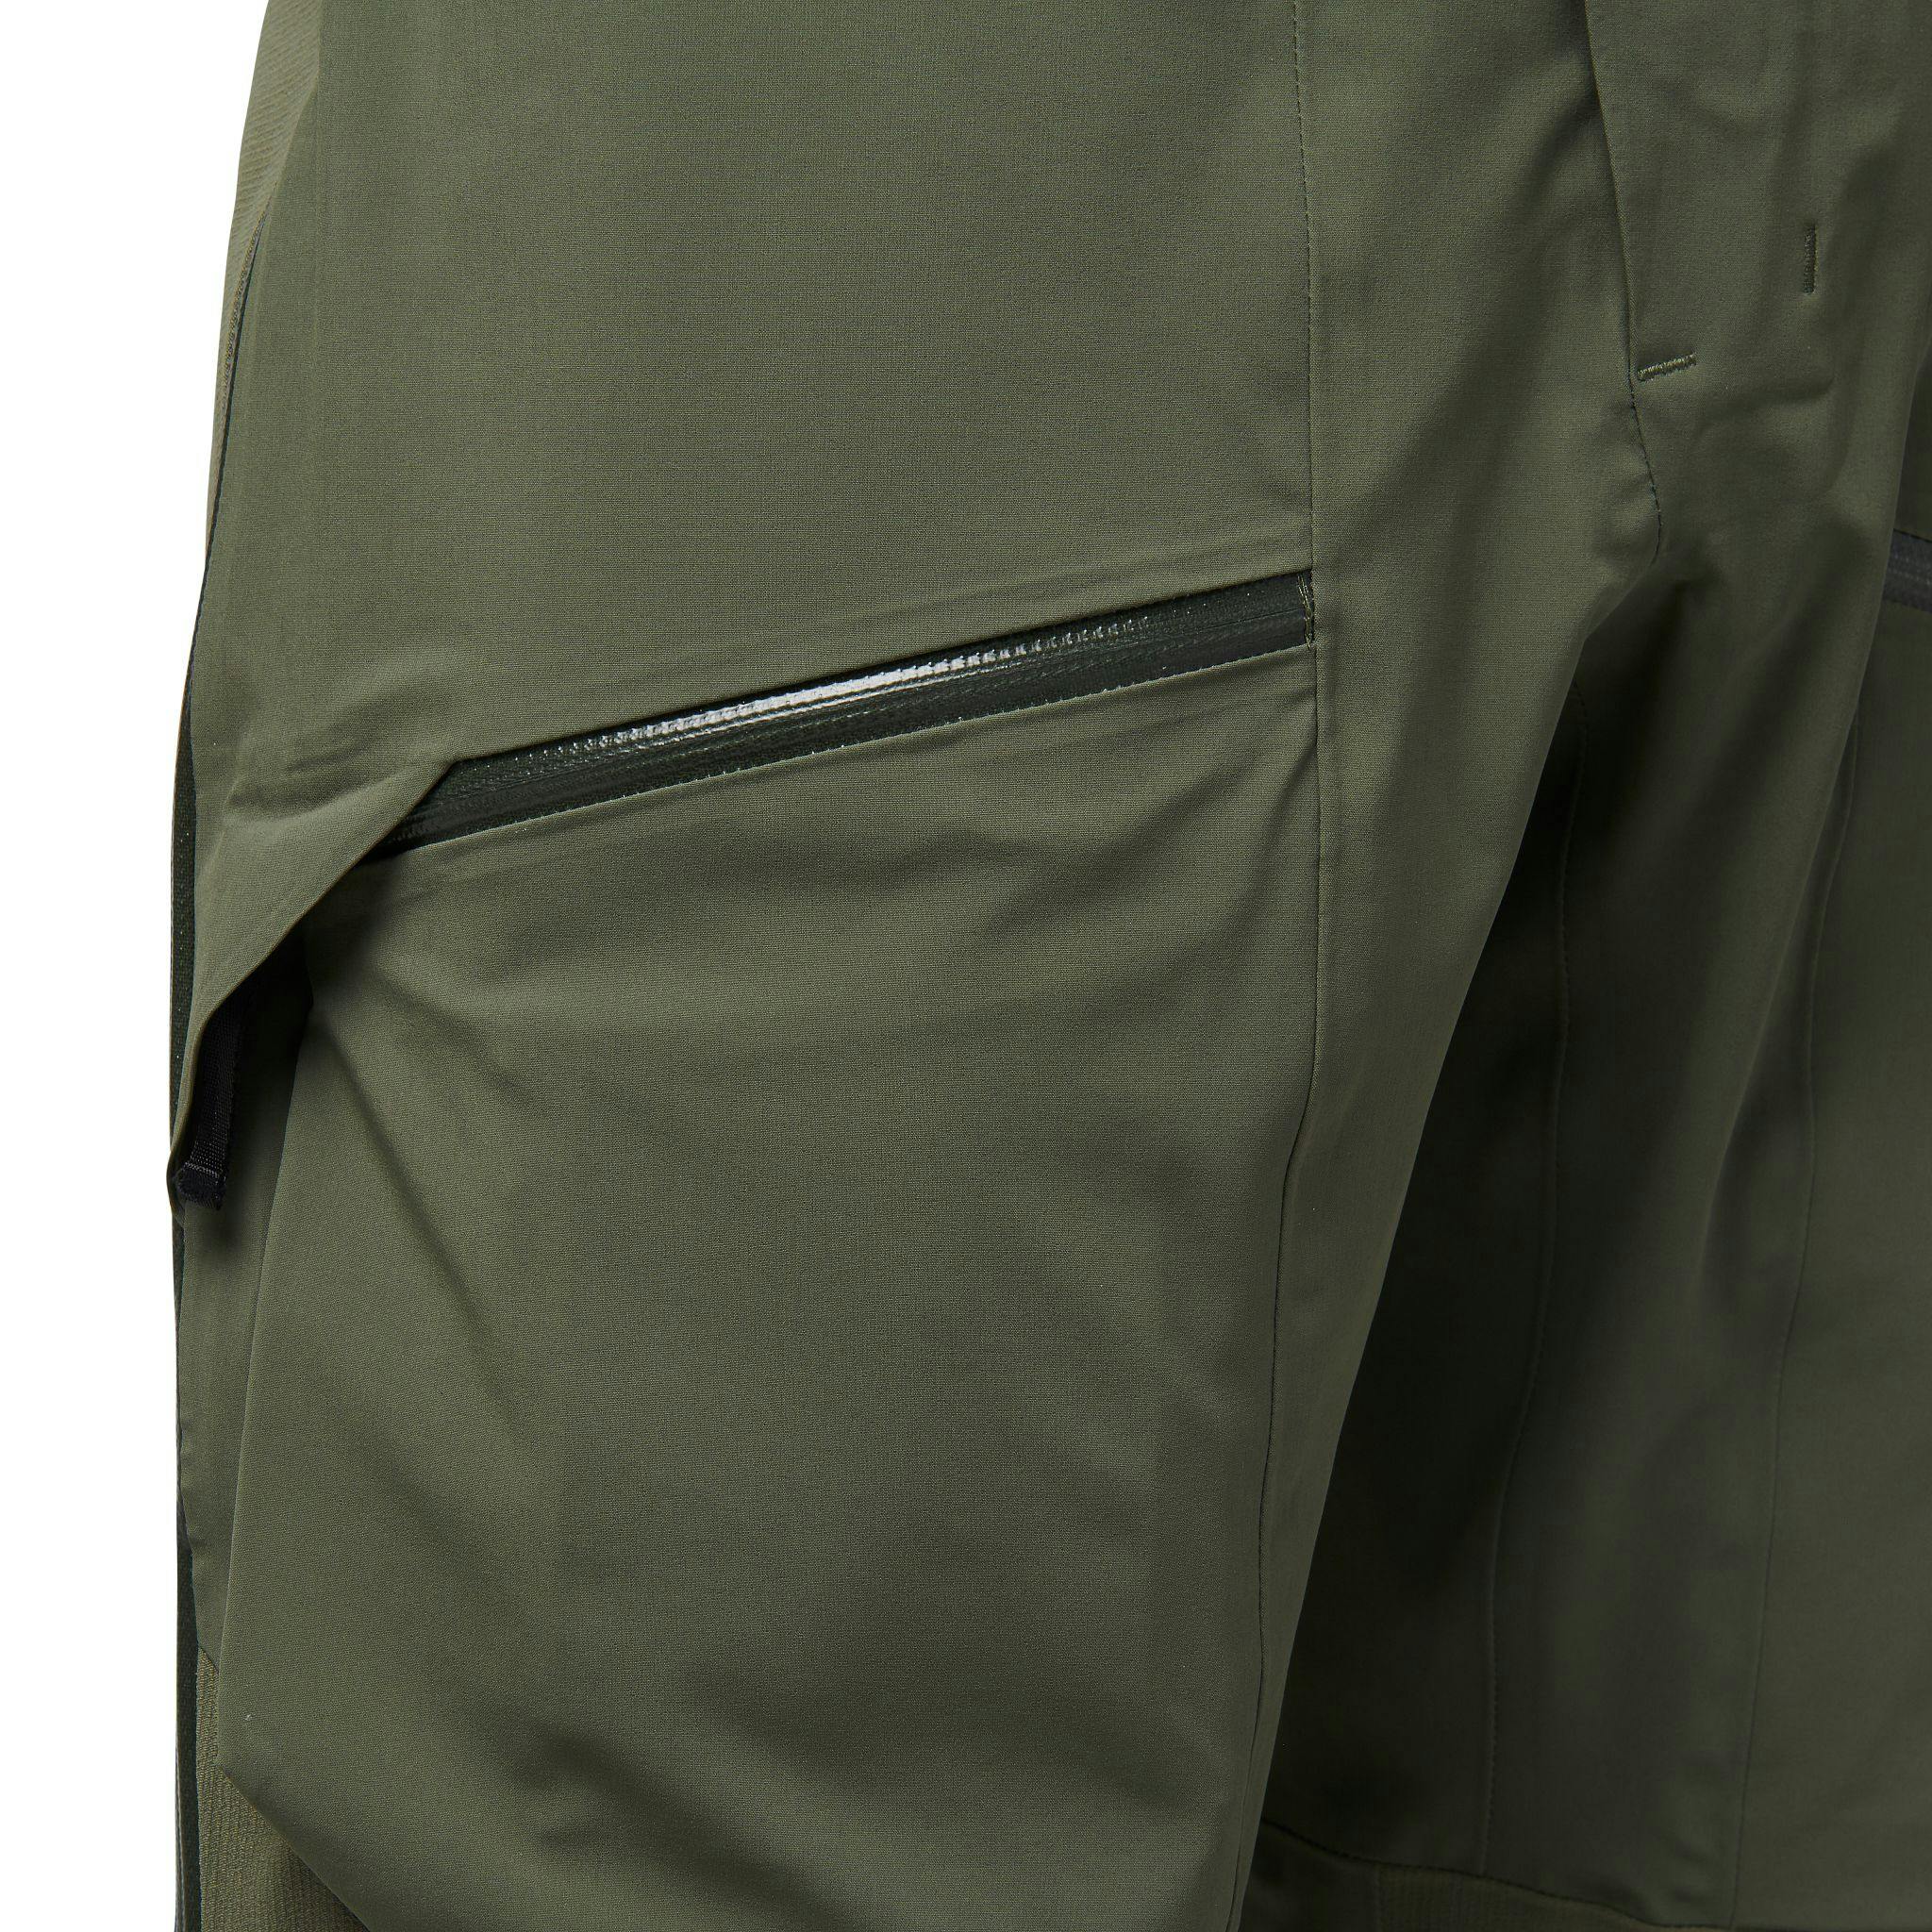 Recon Pro Bib detail shot of right thigh pocket